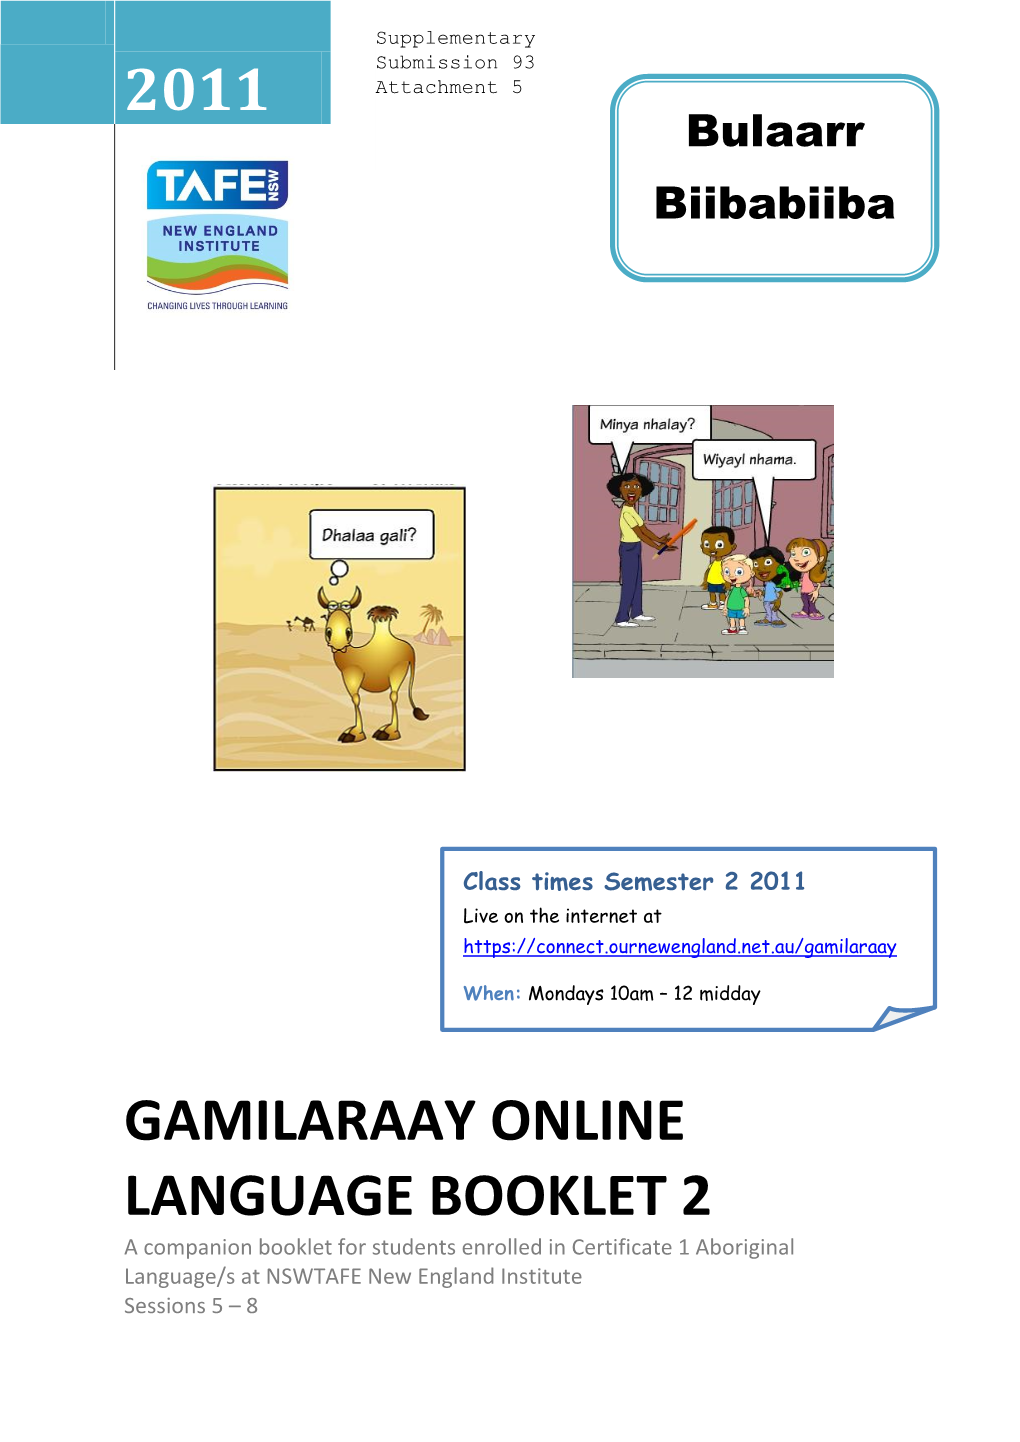 2011 Gamilaraay Online Language Booklet 2